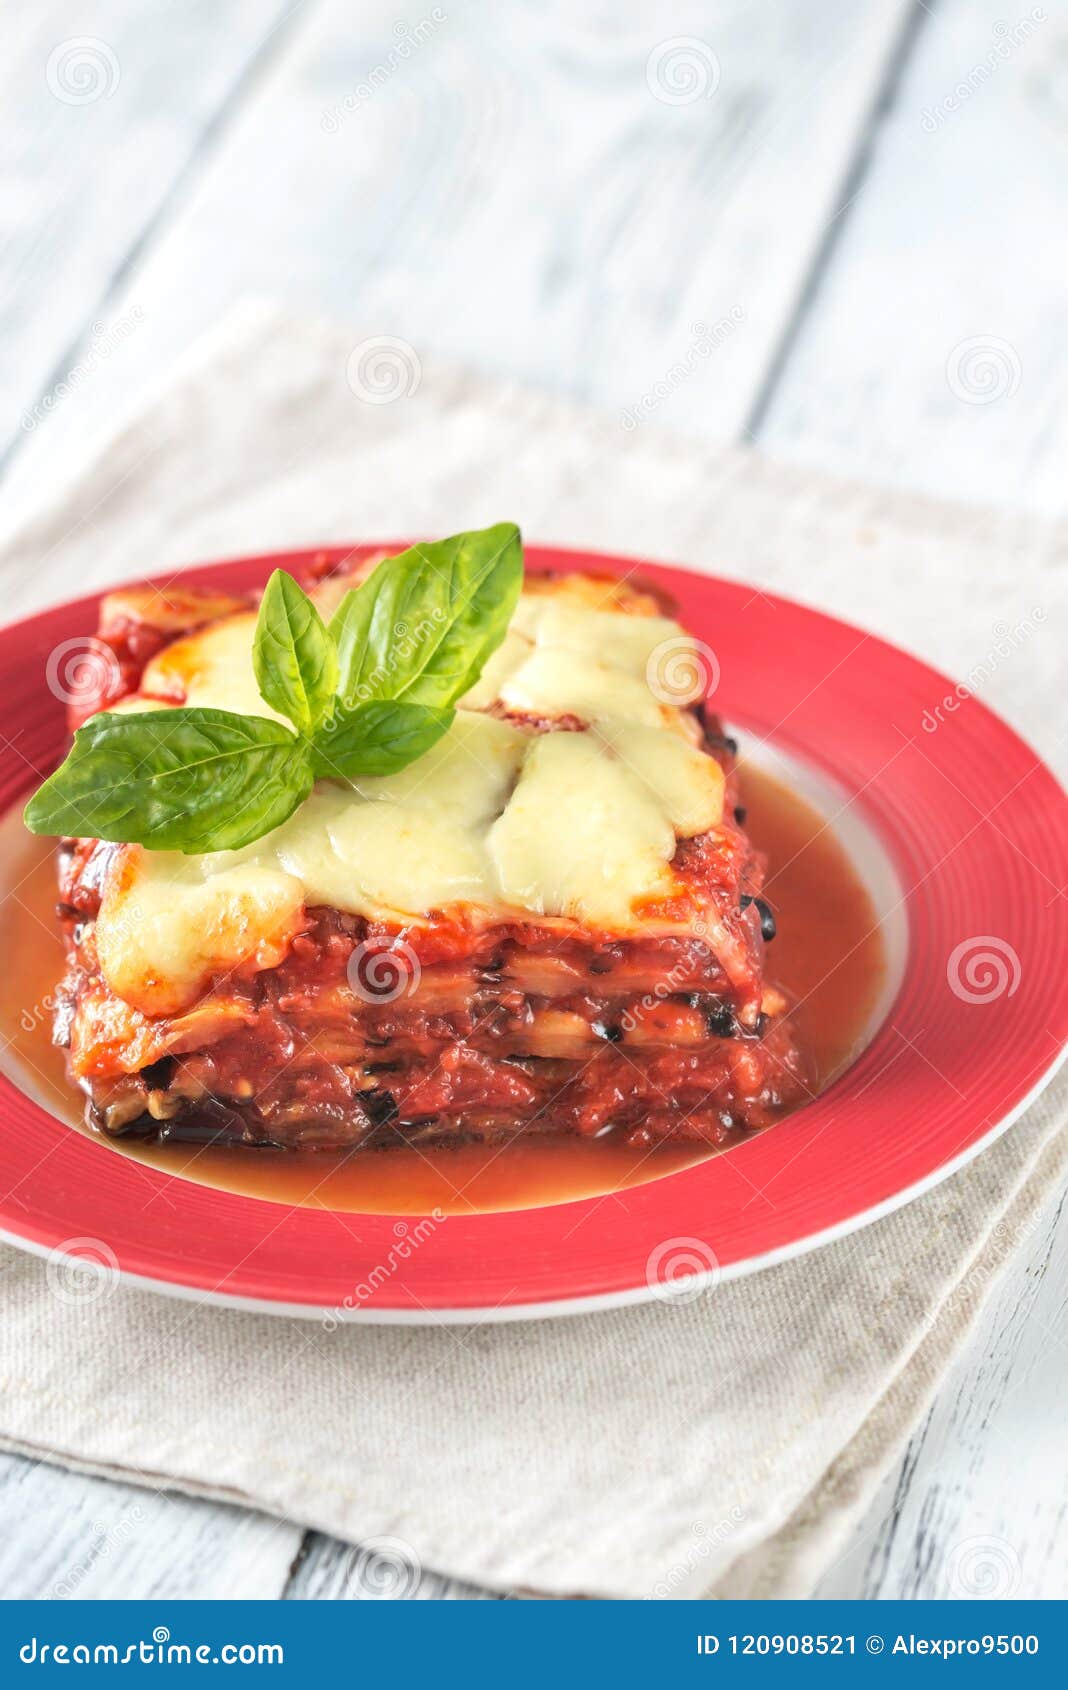 Portion of Parmigiana Di Melanzane Stock Image - Image of plate, dish ...